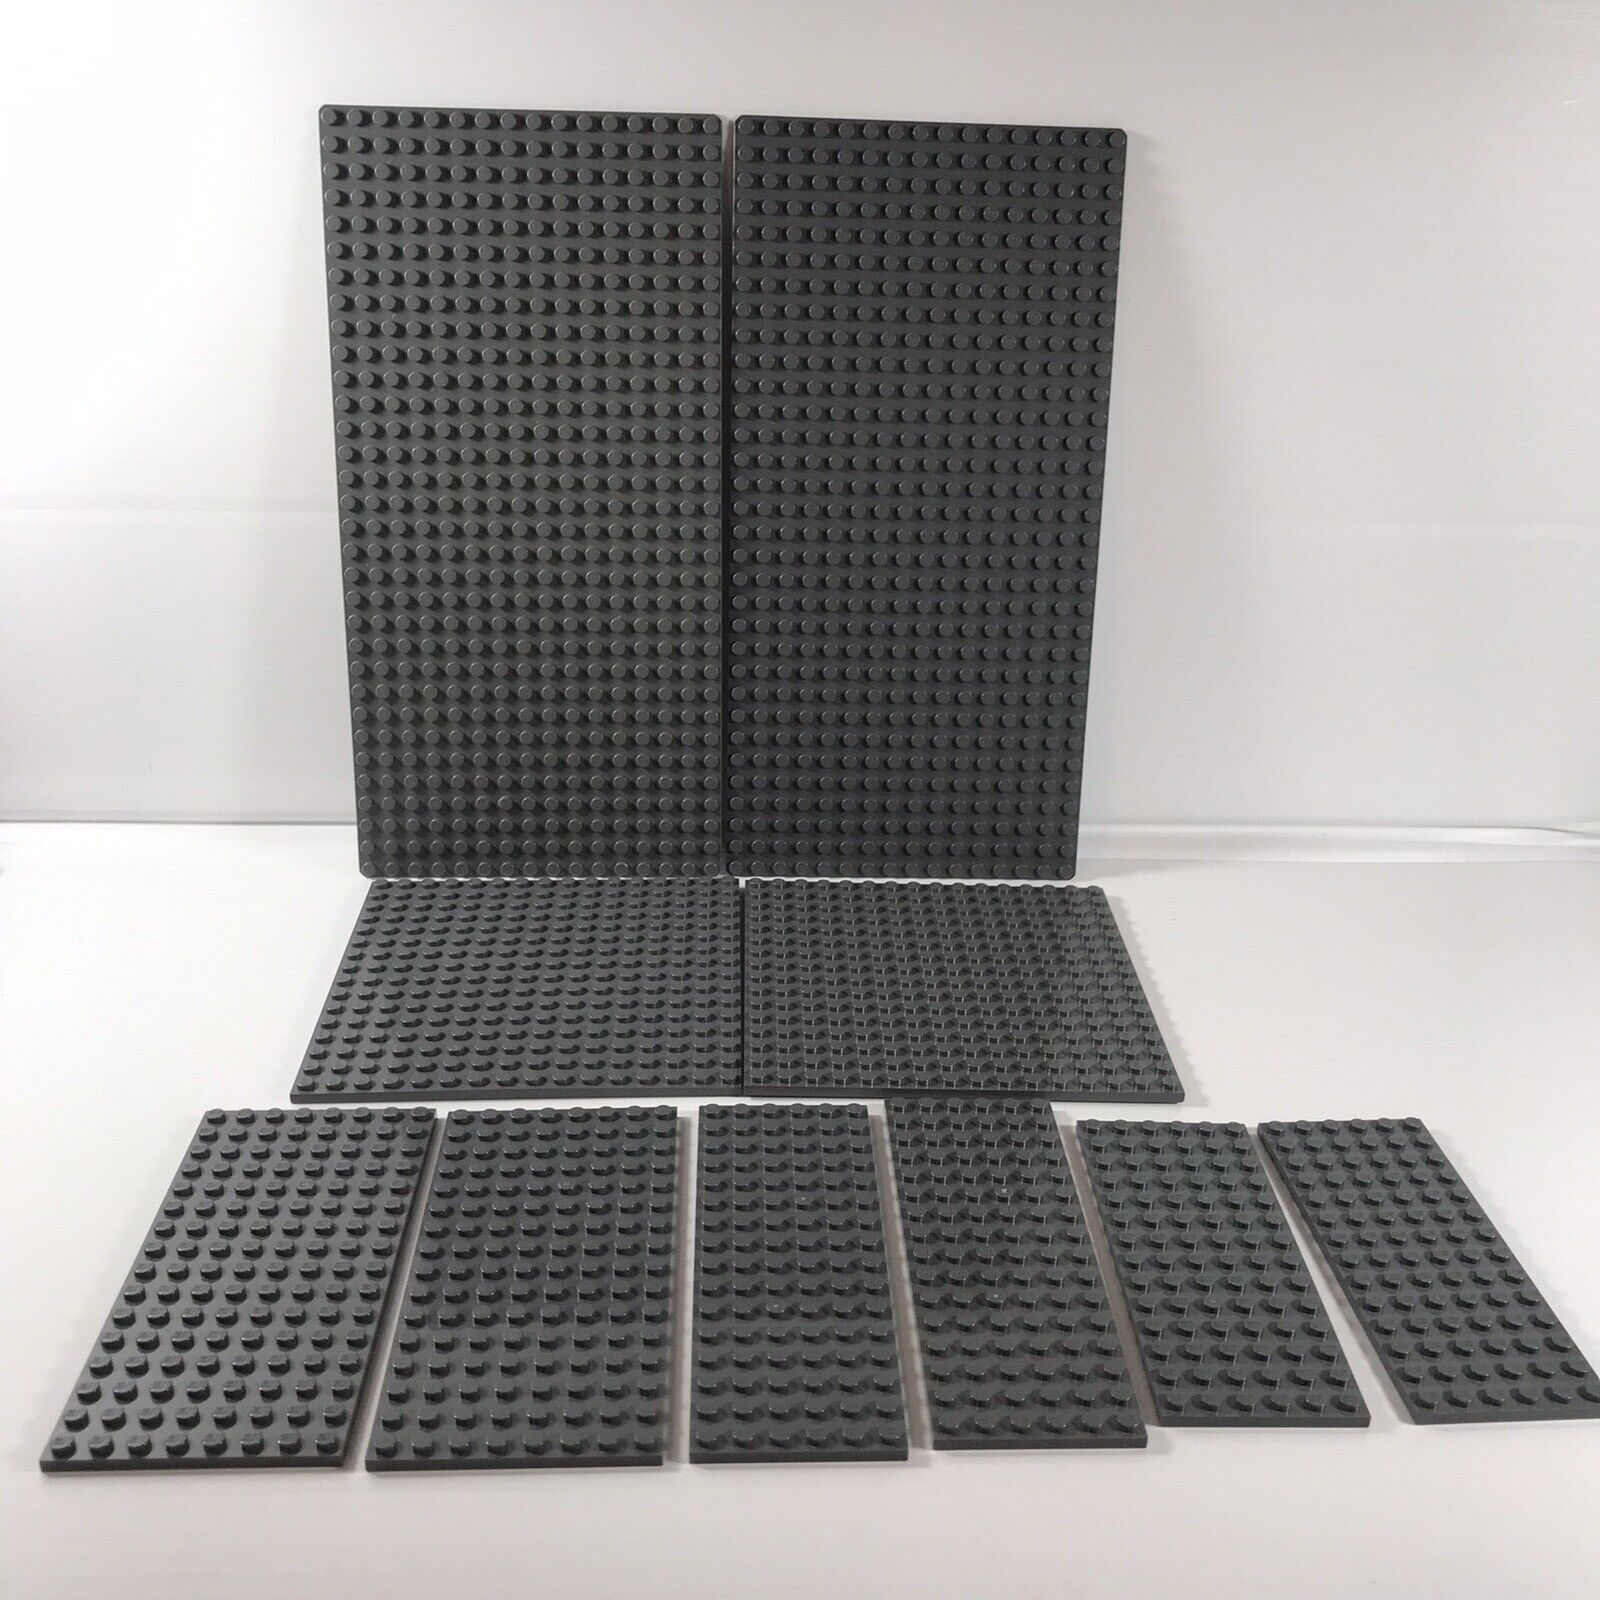 LEGO Dark Bluish Gray  16 X 32  16x16 8x16 6x16 6x14 Dot Base Plate - Lot of 10